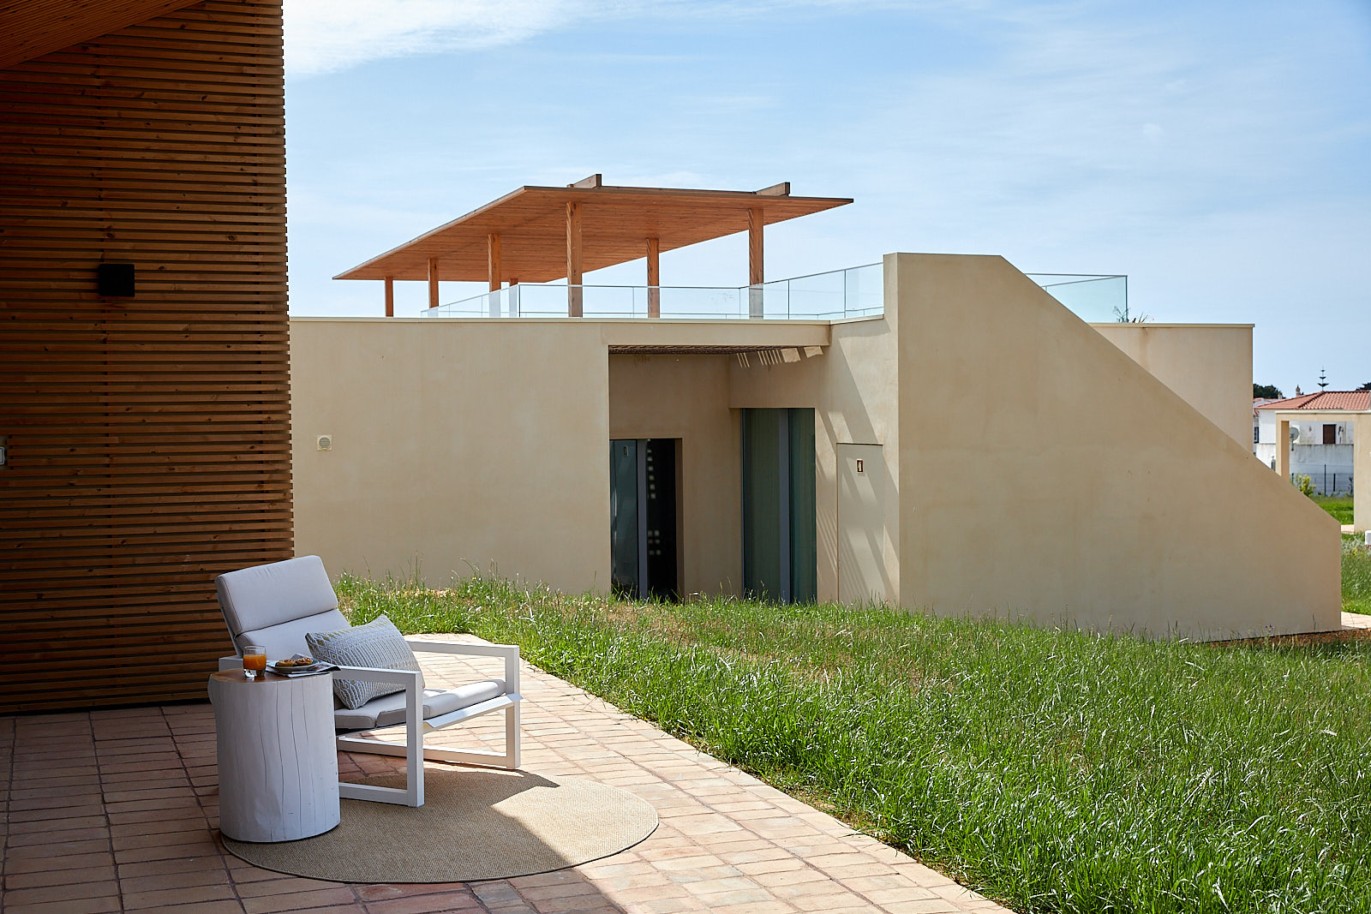 2 bedroom apartment in resort, for sale in Porches, Algarve_229217